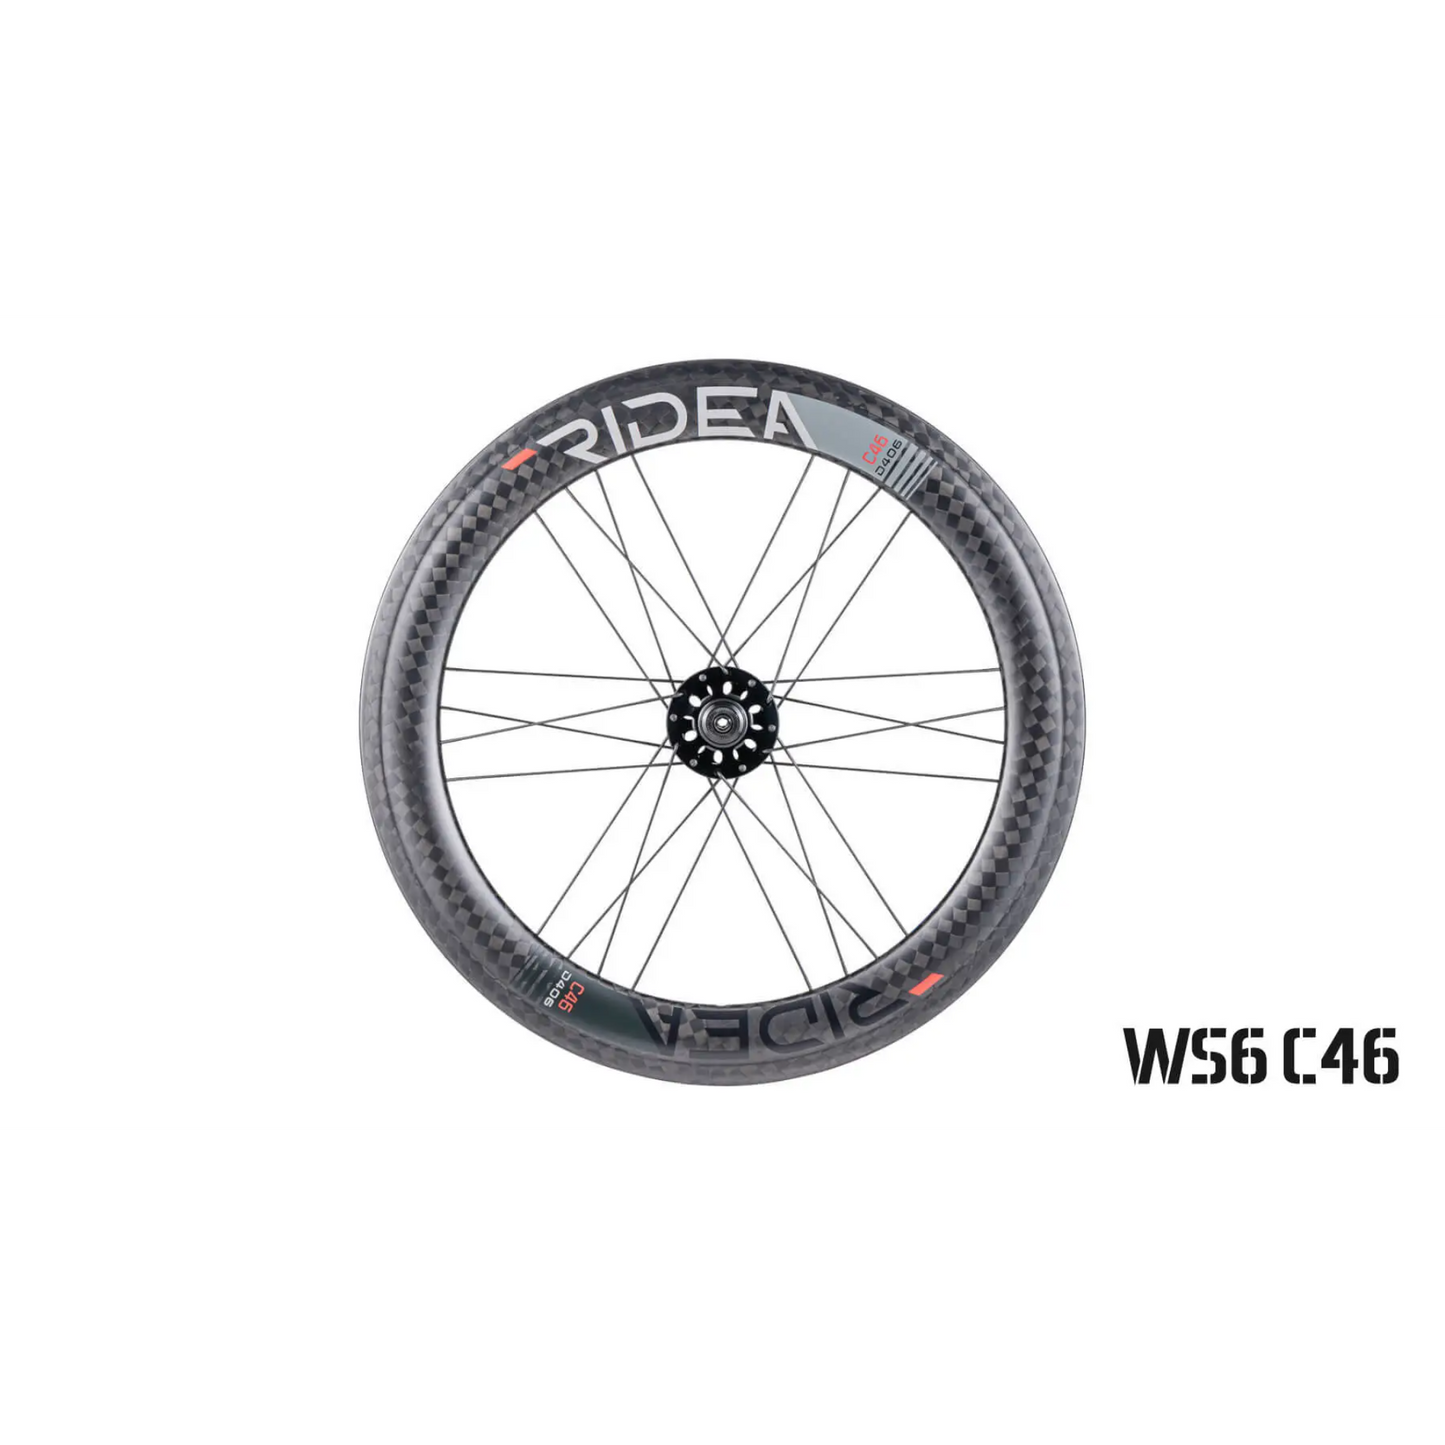 RIDEA - C44 C46 Carbon wheels ISO 355 / 406 碳刀輪組